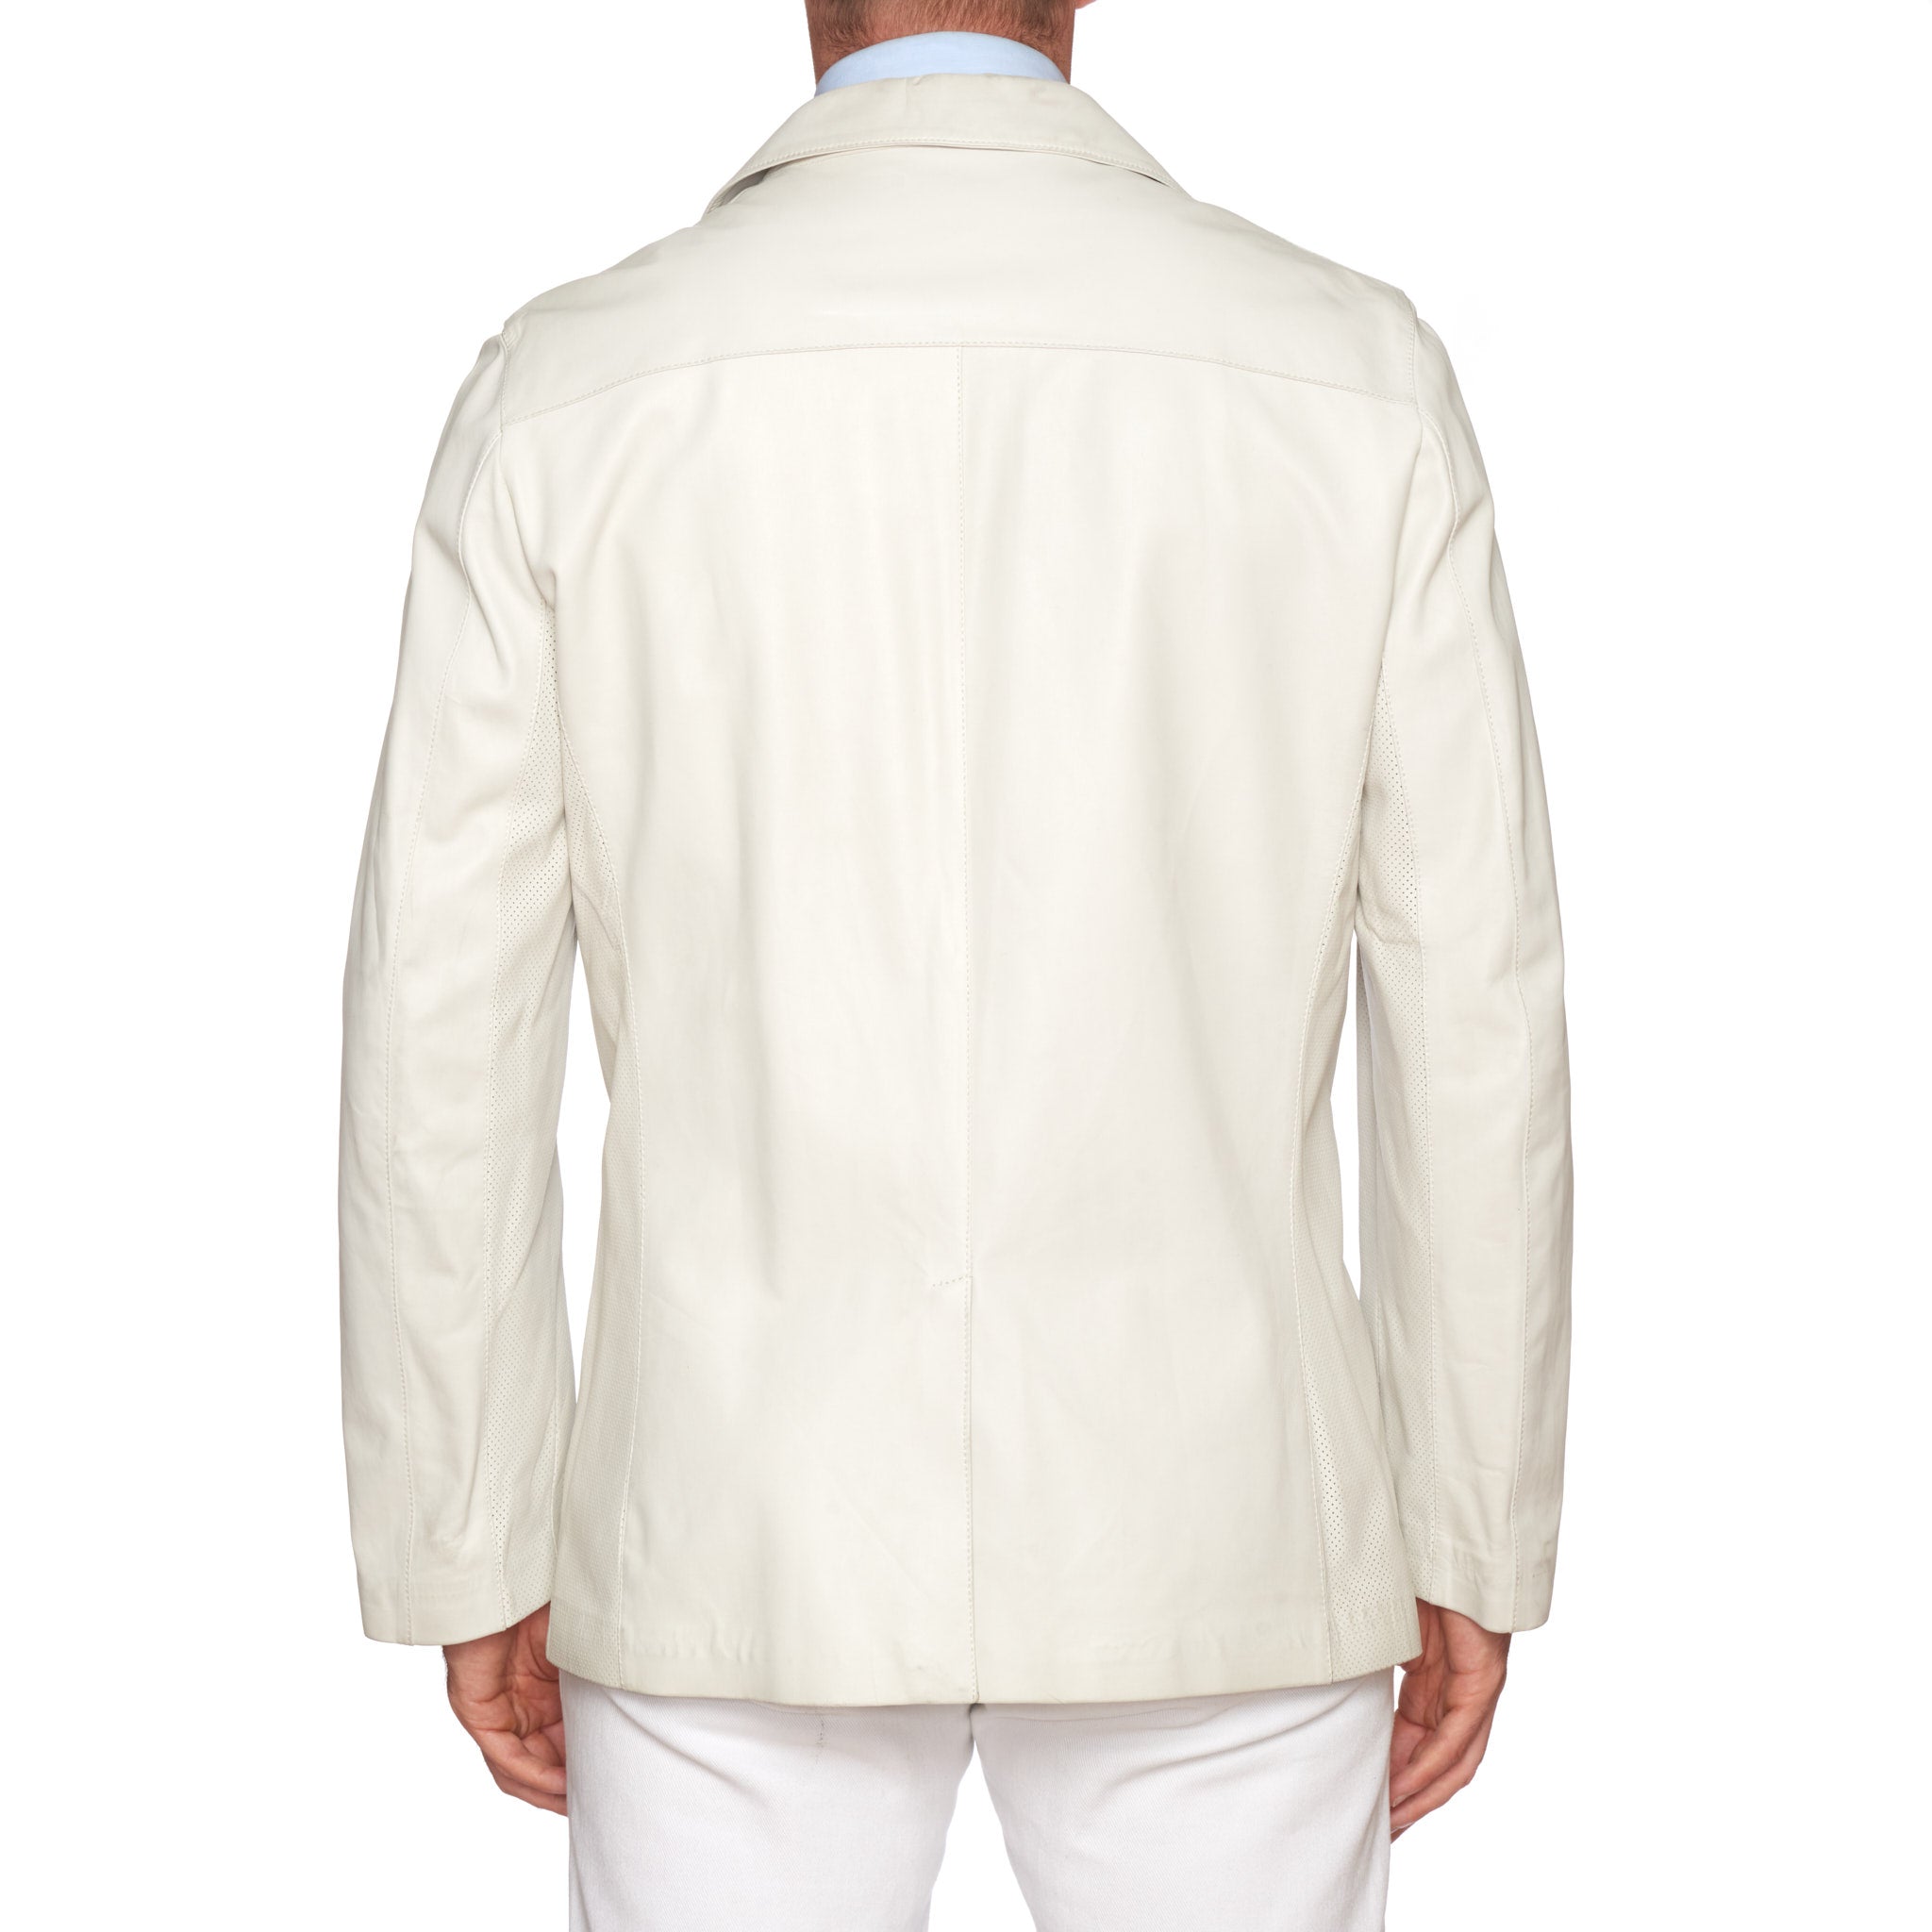 KITON Napoli Off-White Leather Jacket Coat with Perforated Details EU 50 US 40